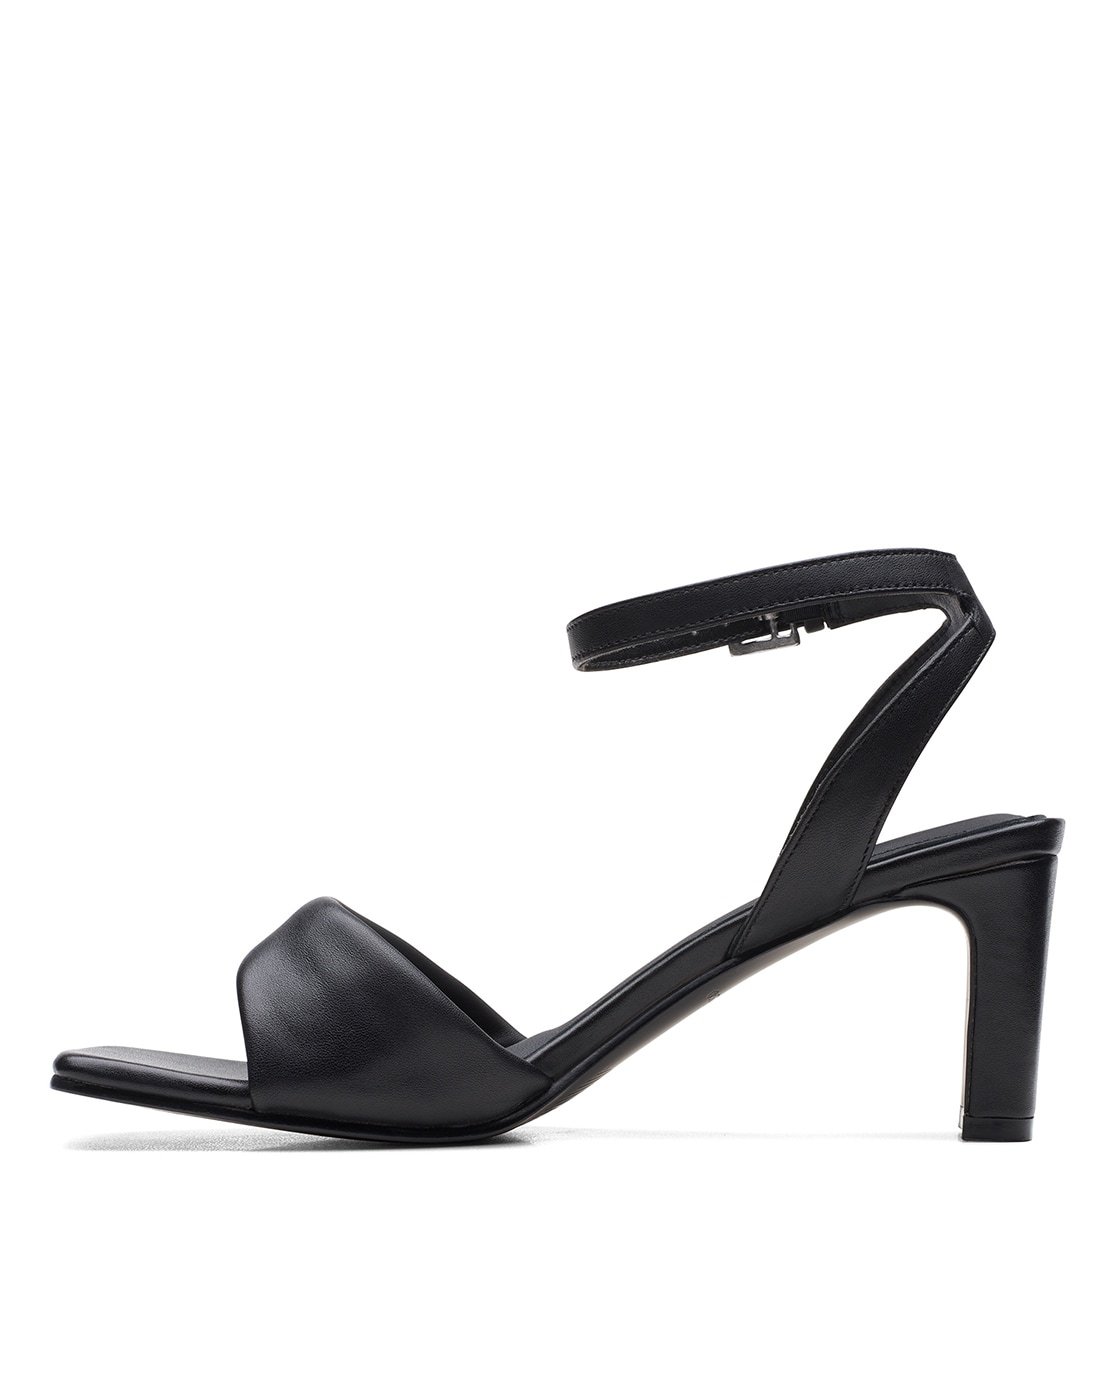 Buy ADDONS Black PU Buckle Womens Formal Heel Sandals | Shoppers Stop